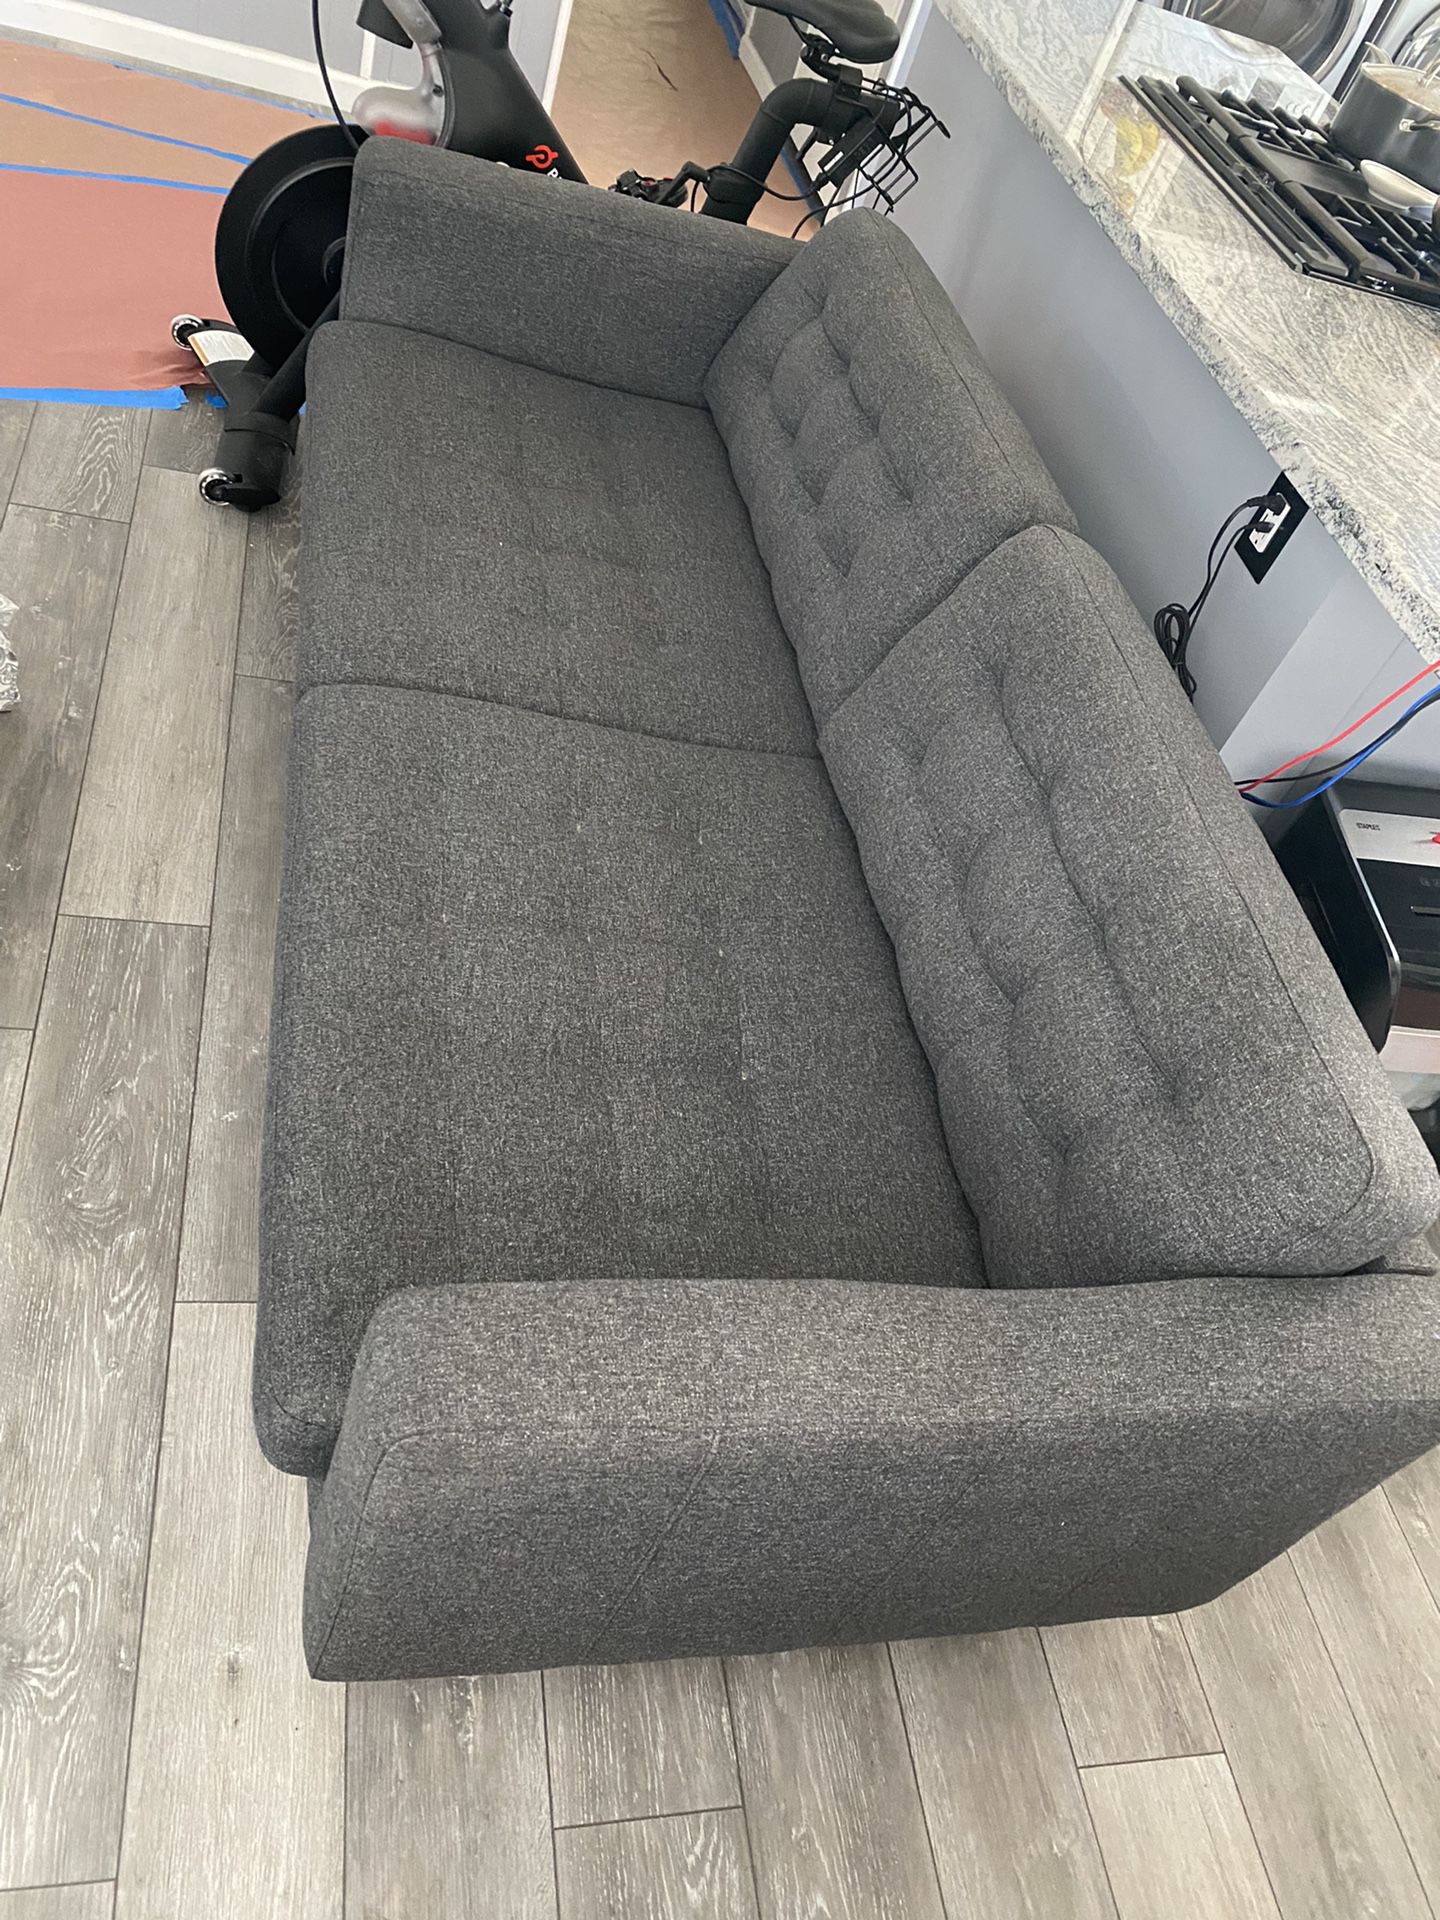 IKEA Dark Couch (Gray)